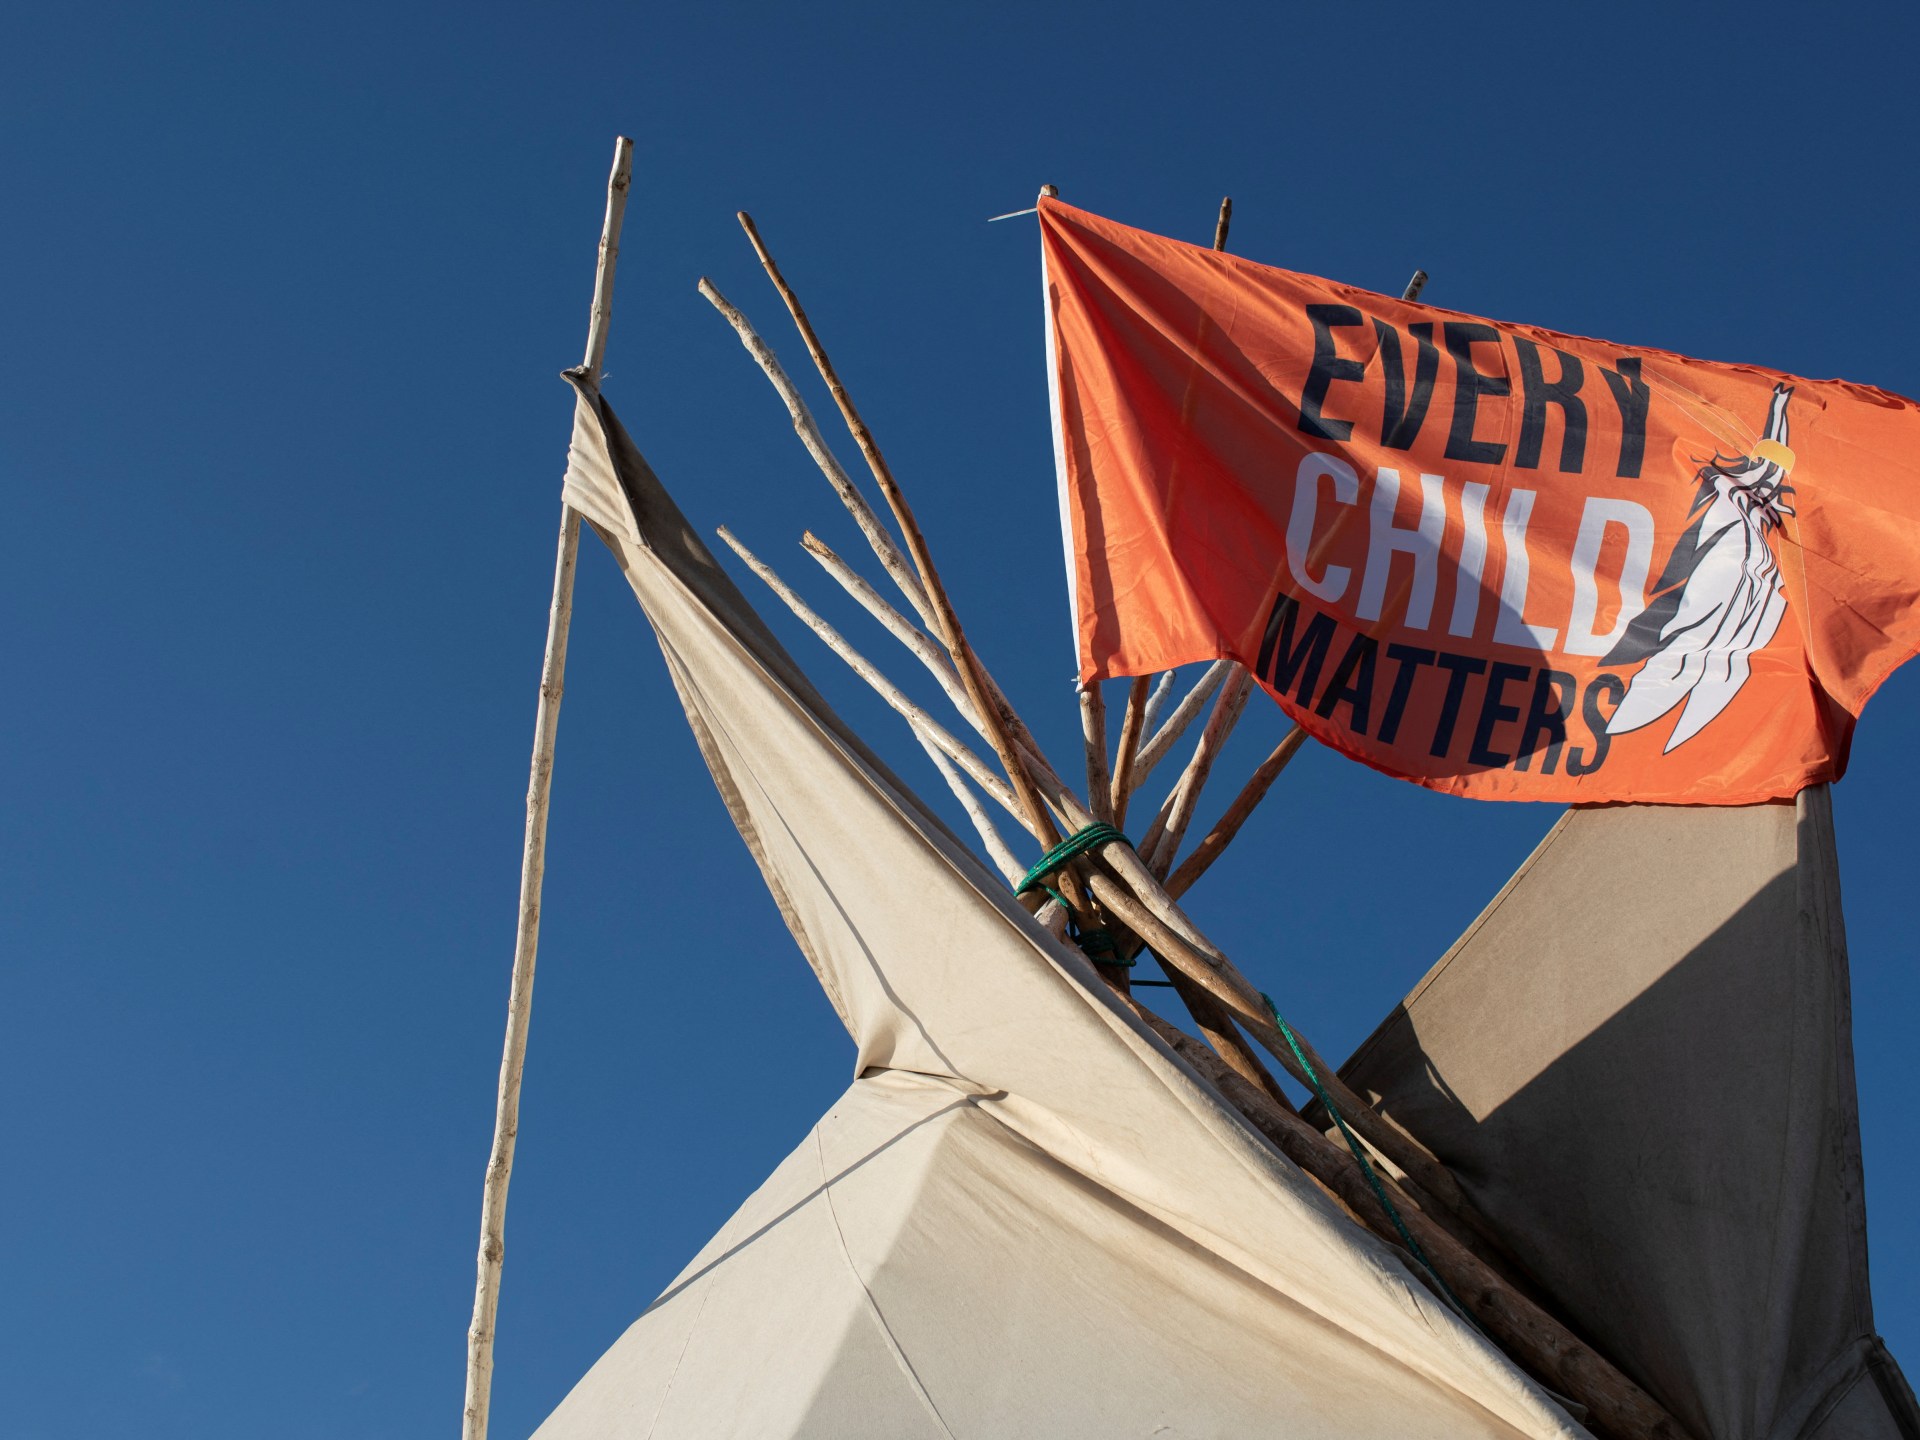 Indigenous child compensation deal falls short: Canadian tribunal | Indigenous Rights News